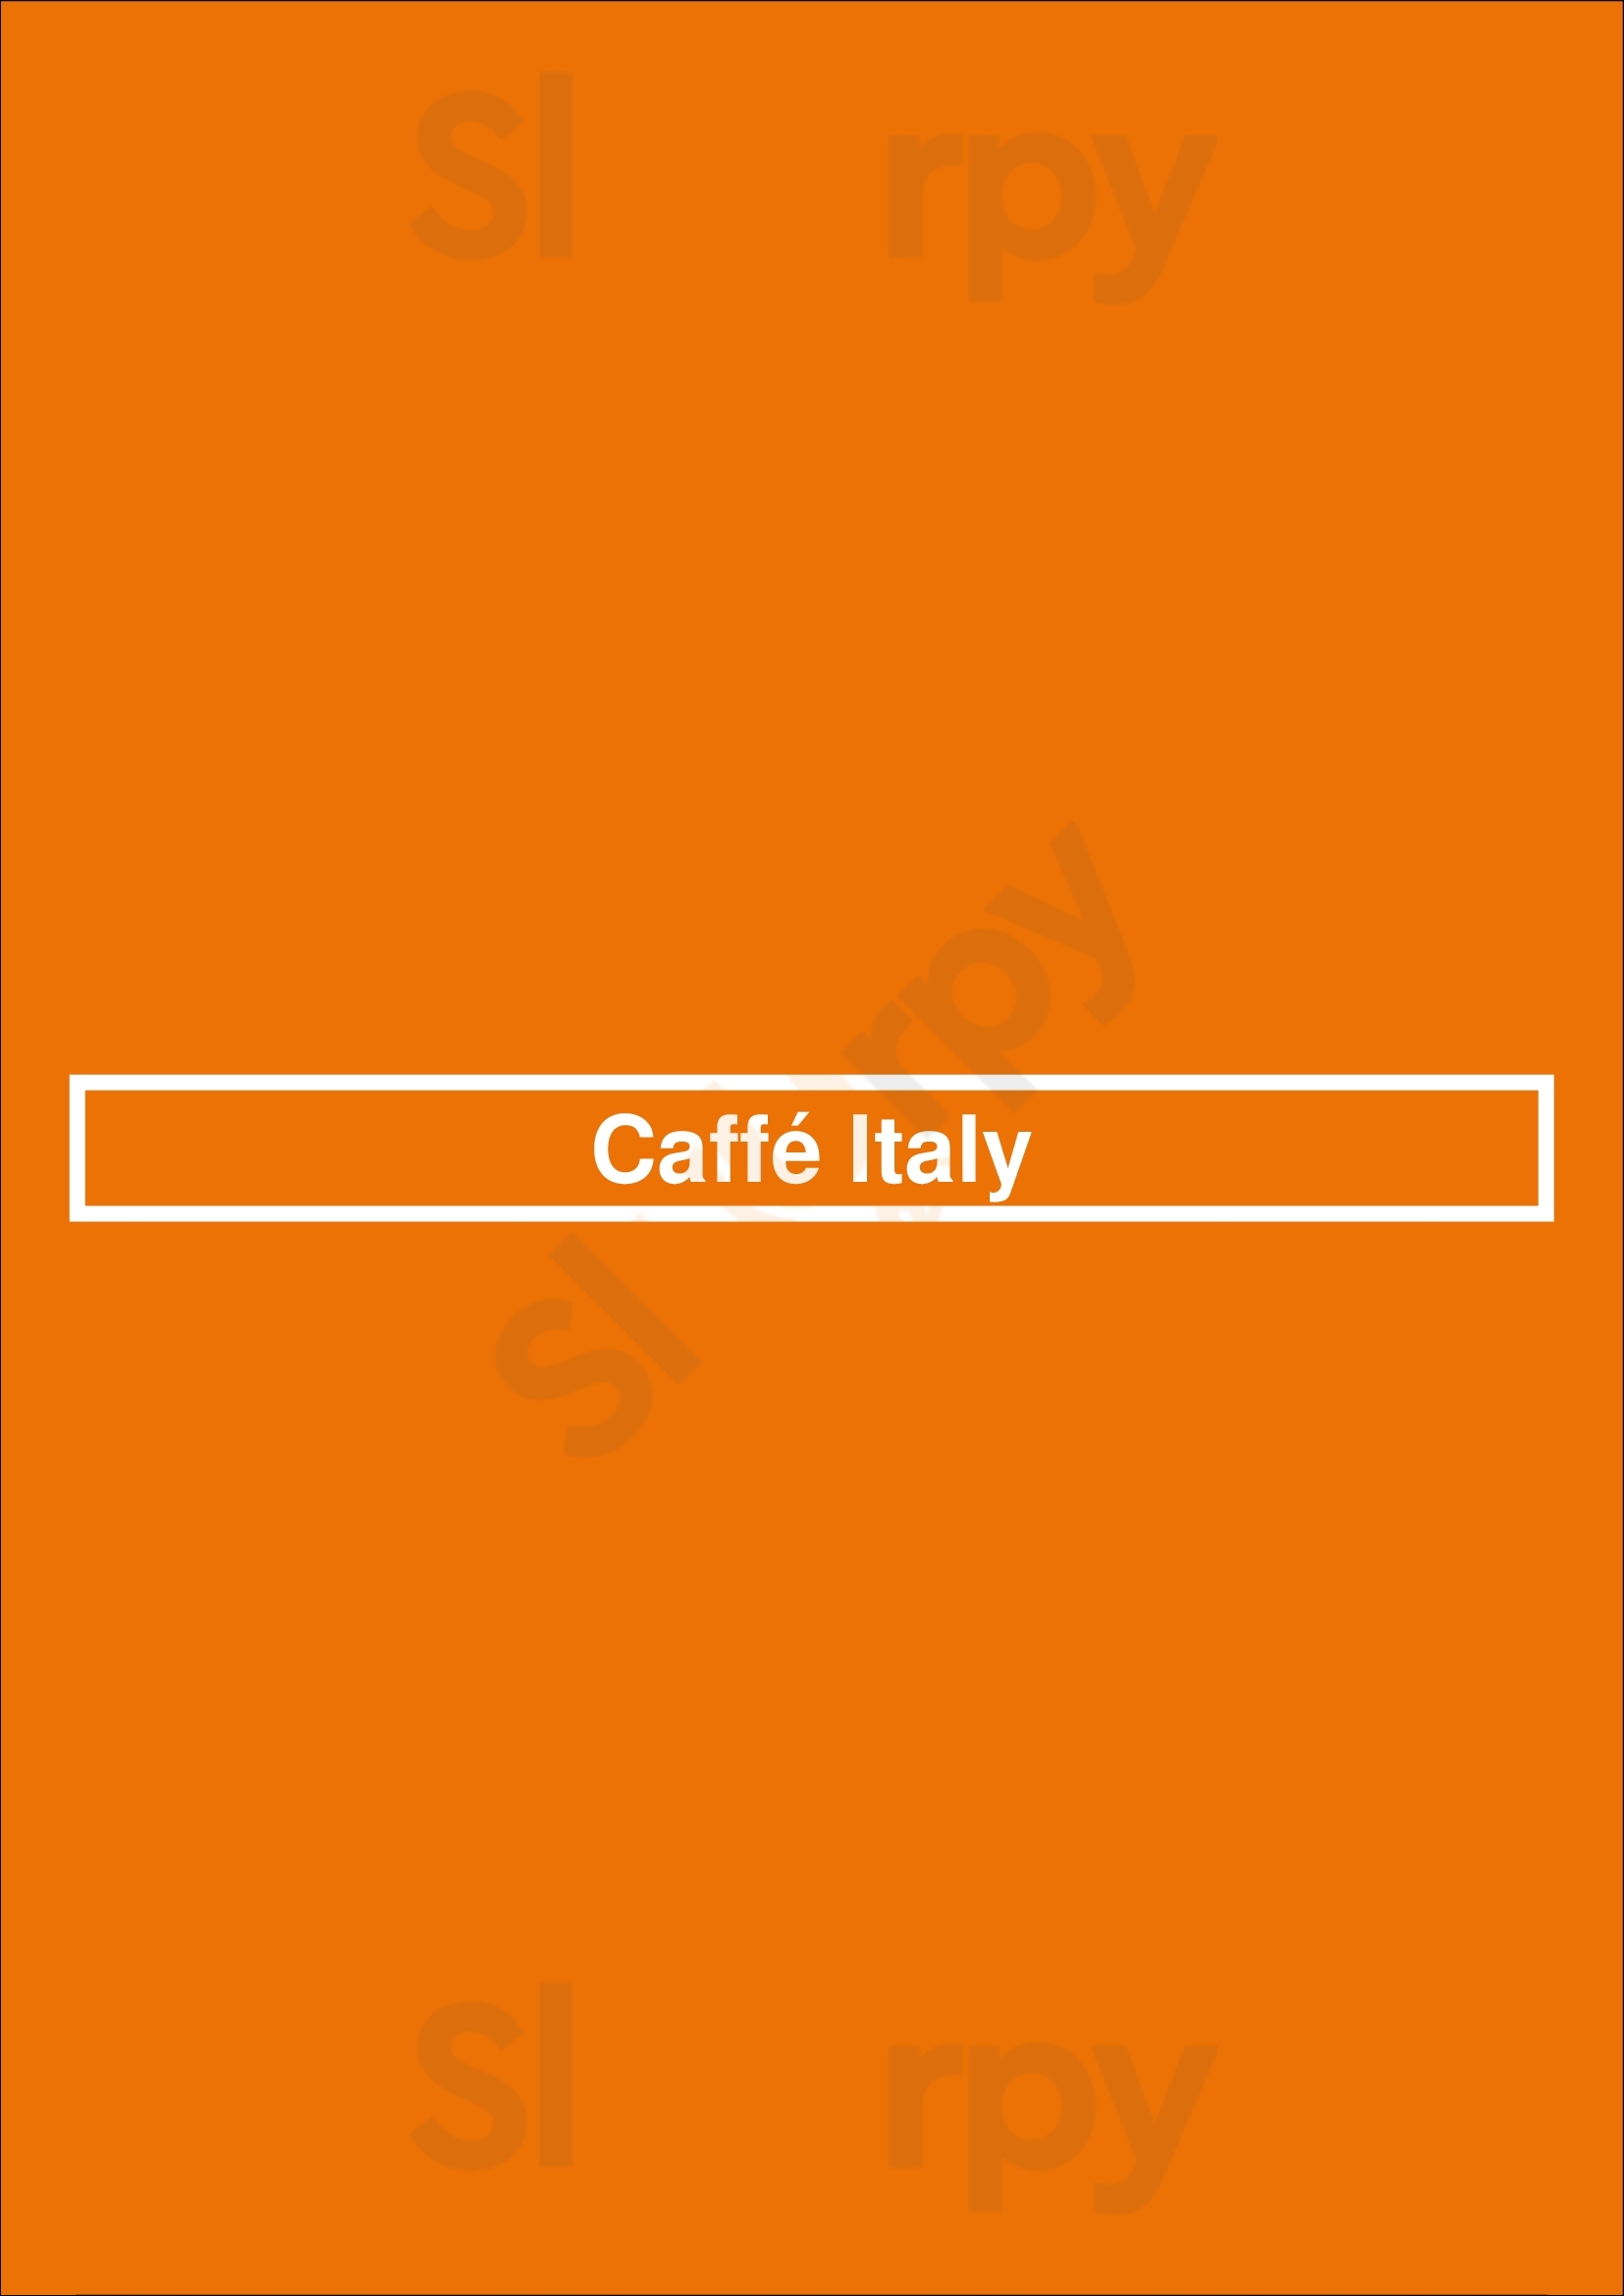 Caffé Italy Braga Menu - 1